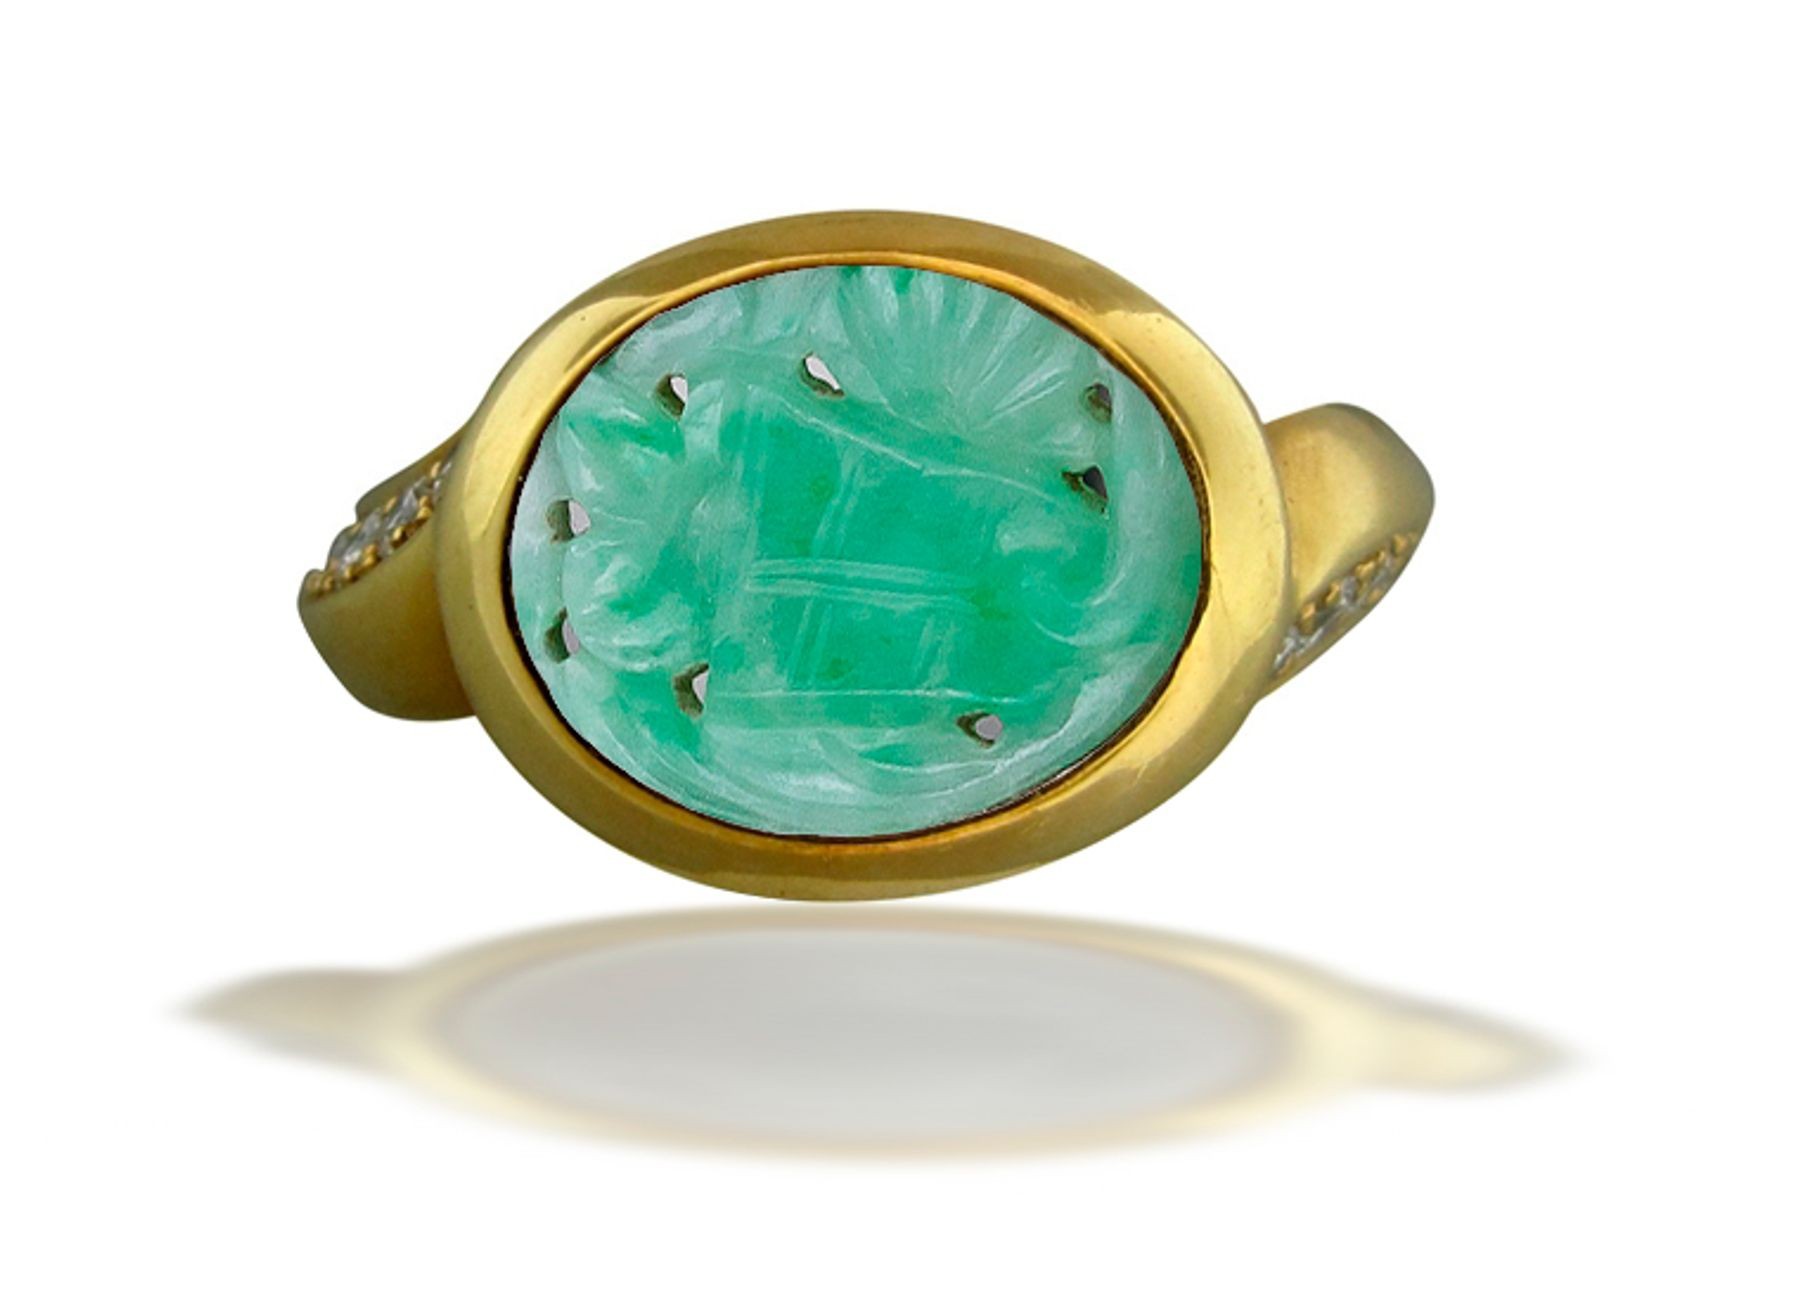 Special Design Art Nouveau "Vibrant" Natural Color Deep Candy Apple Green Jadeite Burma Carved Jade Ring